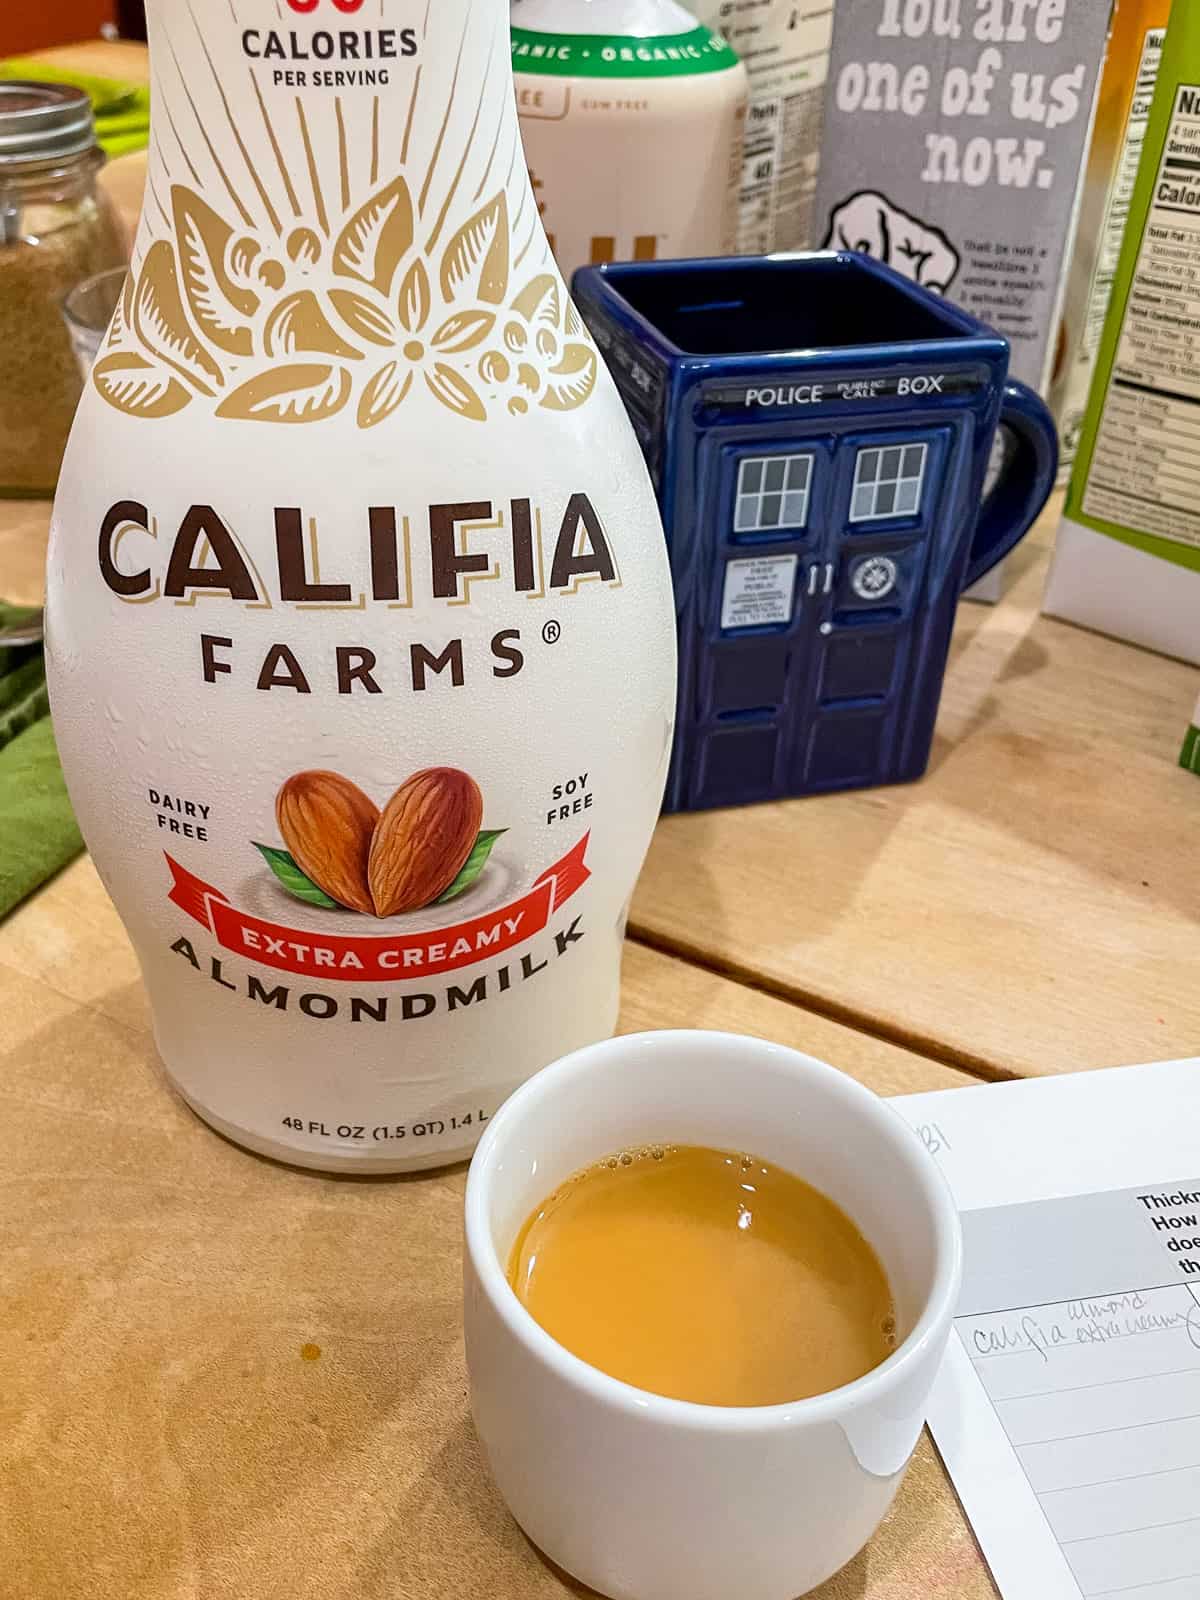 Califia Farms Extra Creamy Almondmilk with black milk tea in front in cup